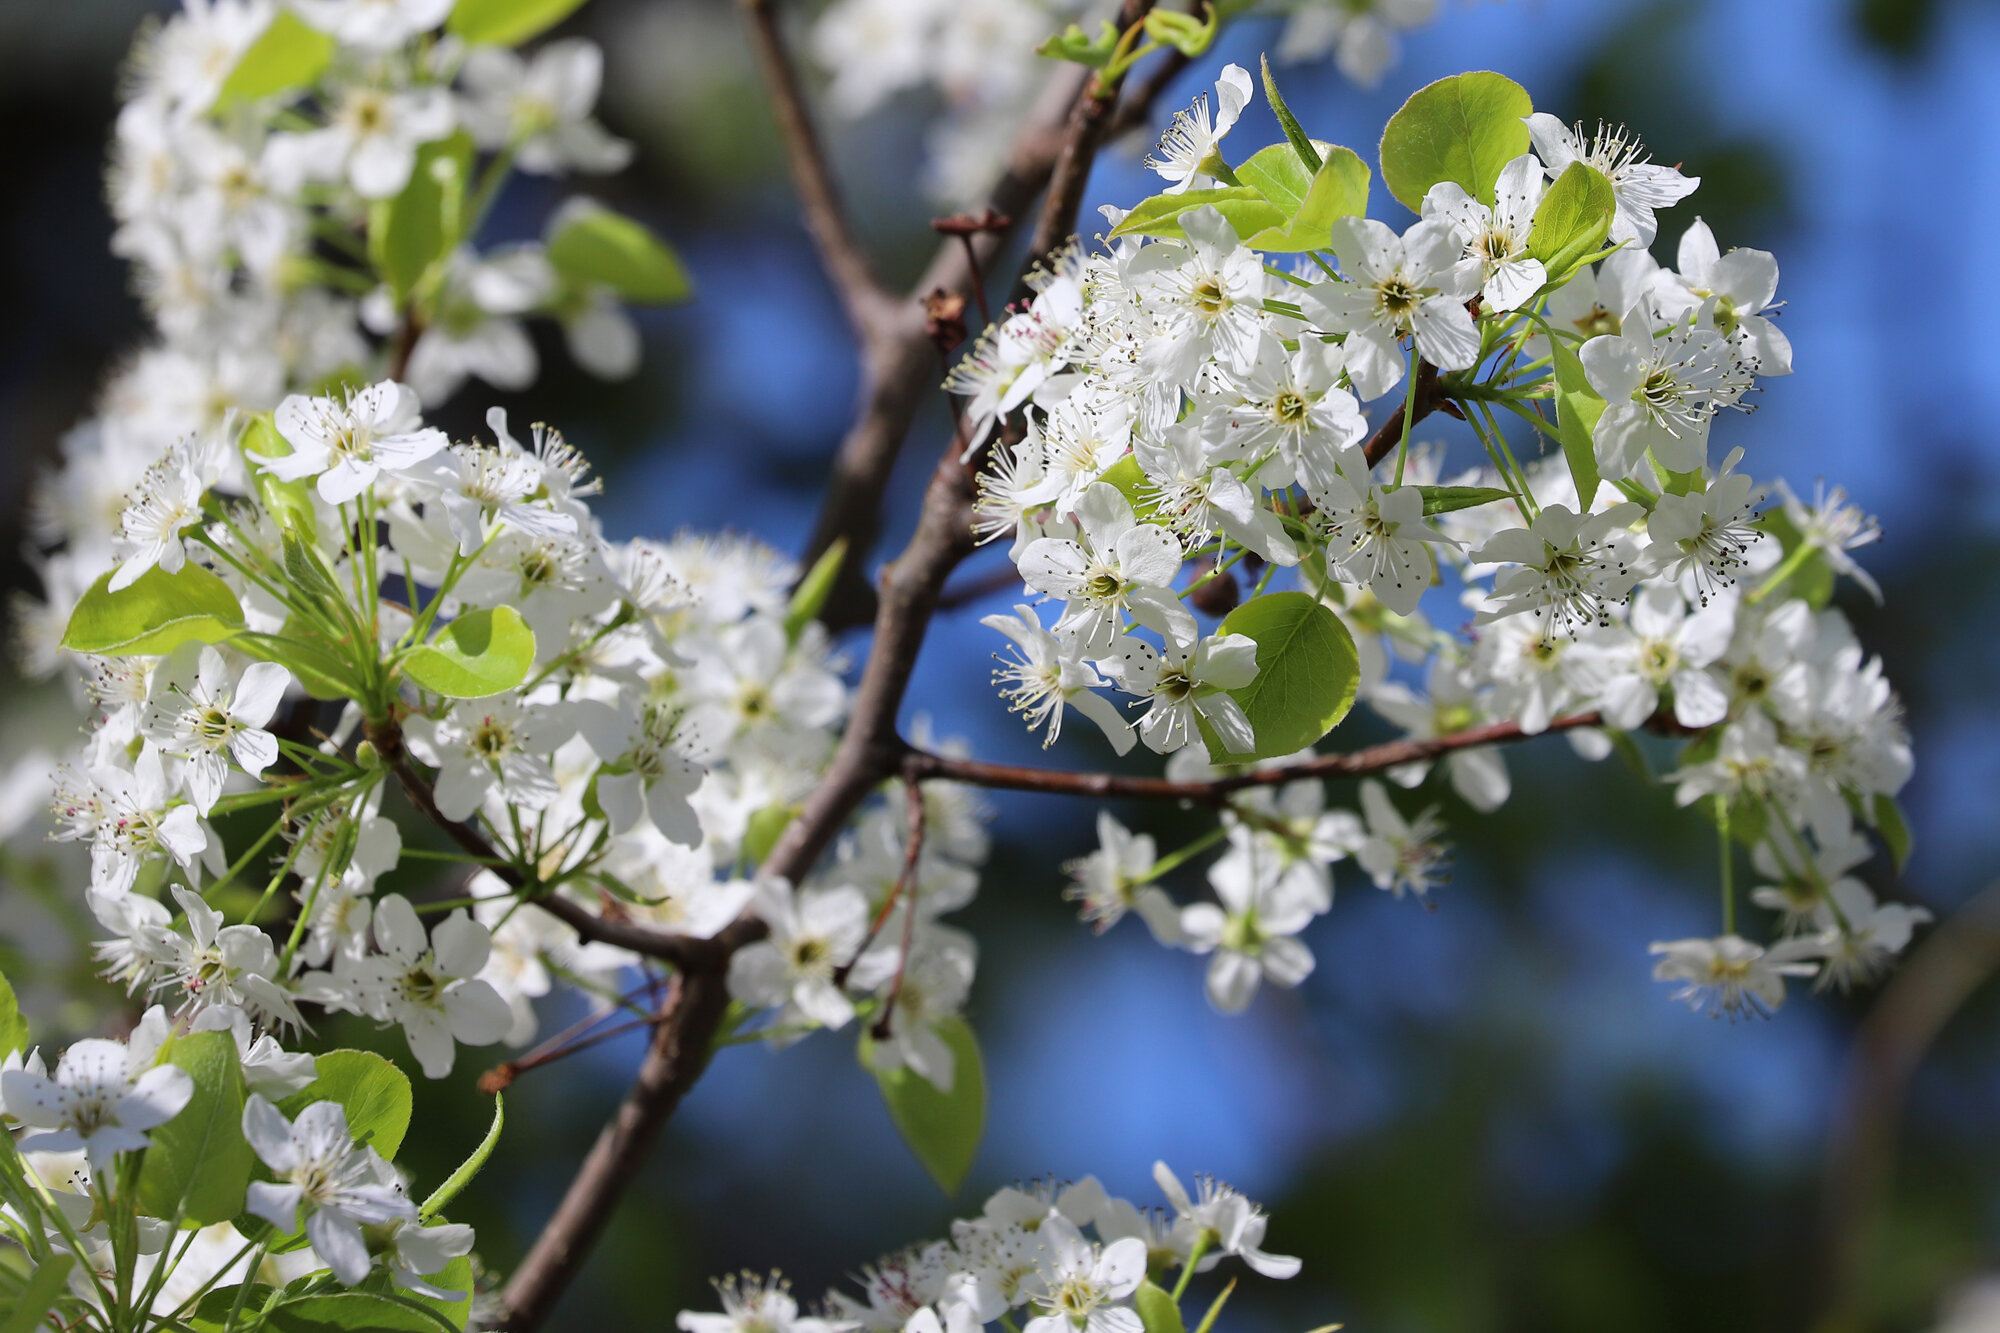  Bradford Pear Blossoms / Harris Teeter Retention Pond / 14 Mar 